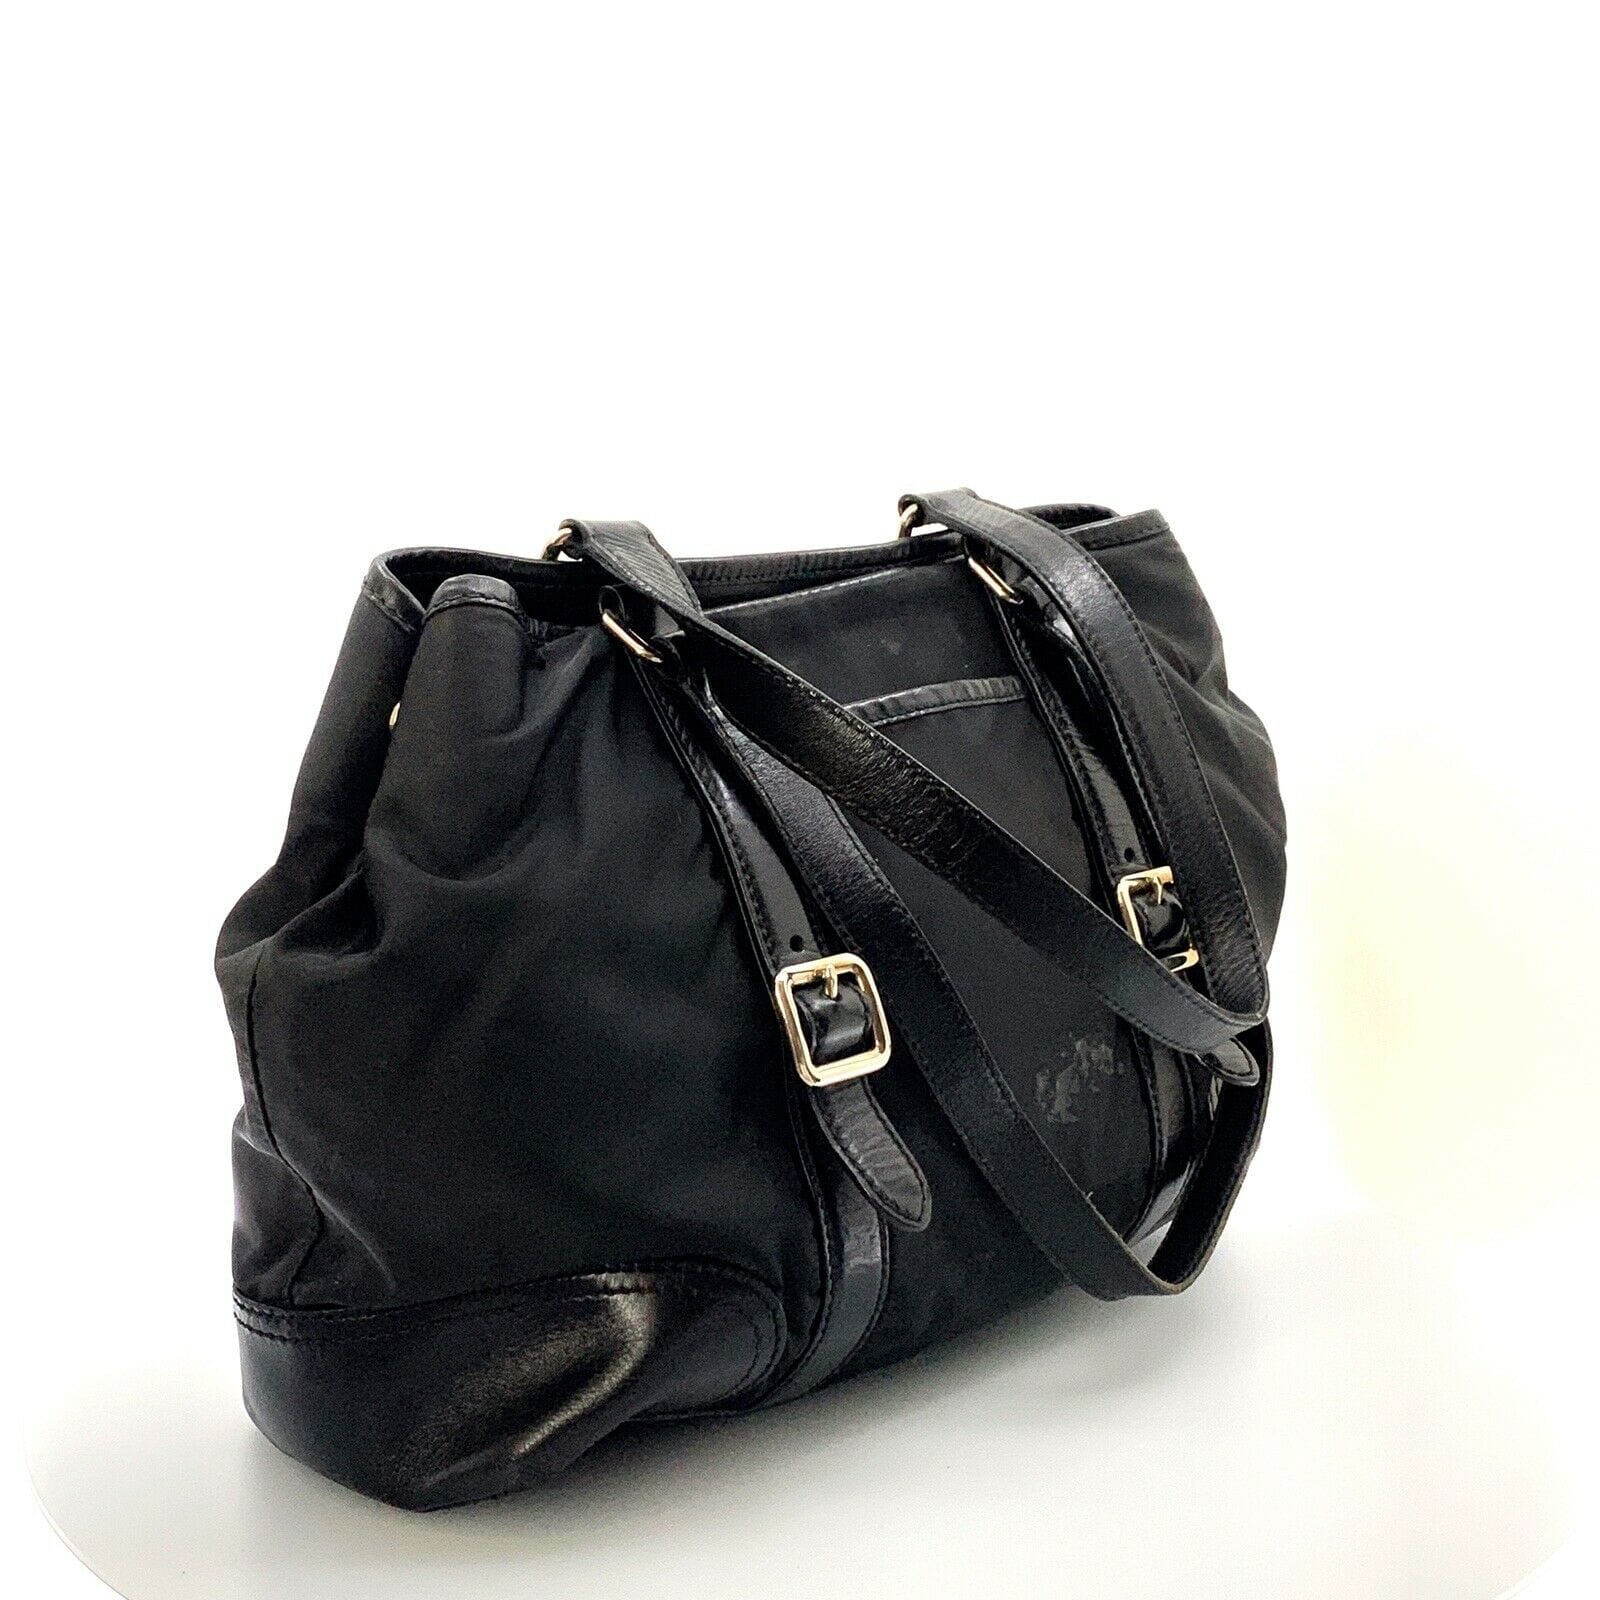 PRADA Monochrome Charms Embellished Saffiano Leather Crossbody Shoulder Bag  | eBay